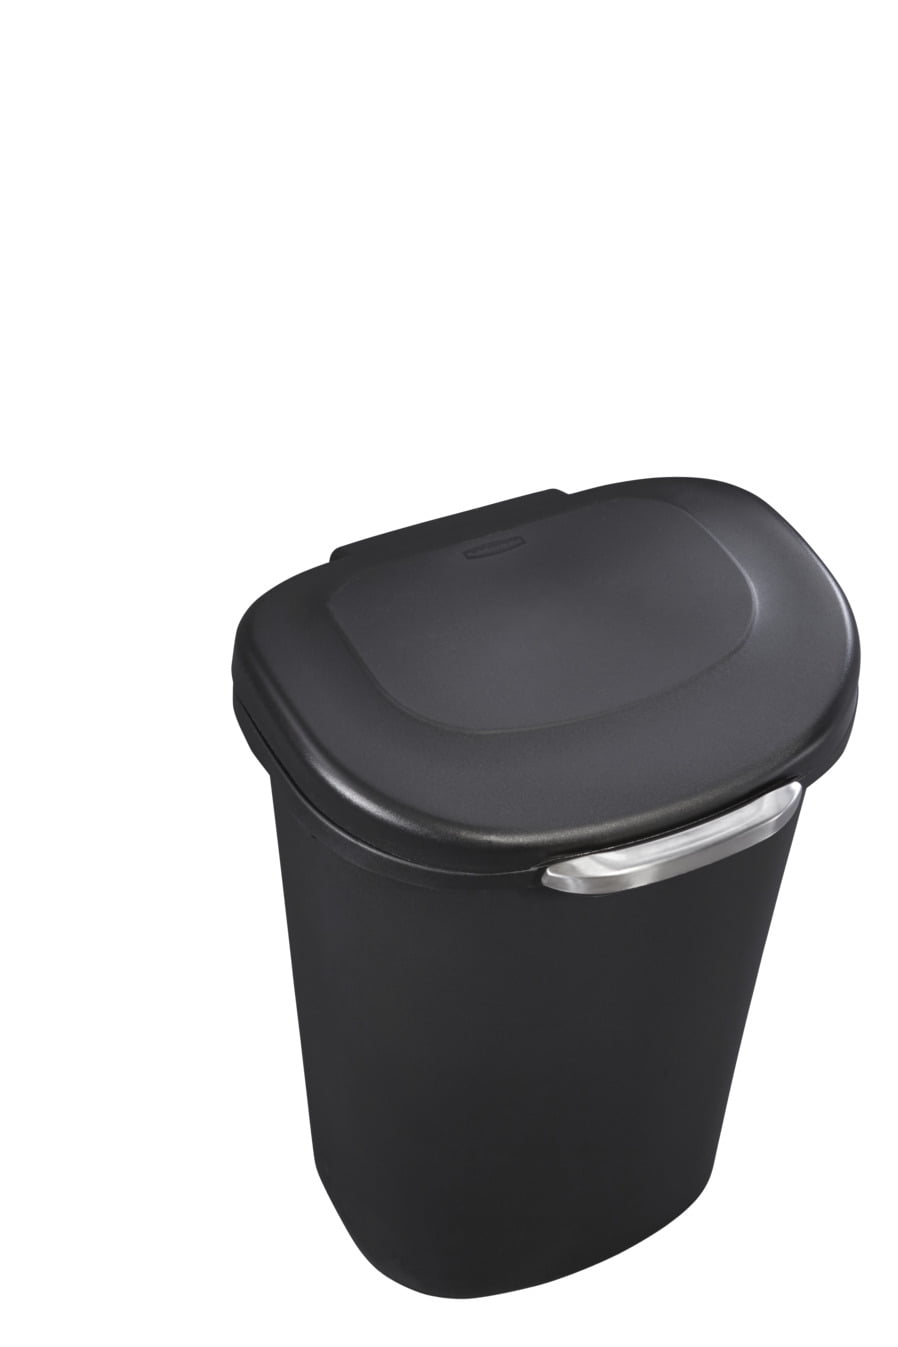 Rubbermaid 13 gal Premium Touch Top Plastic Kitchen Trash Can, Black 